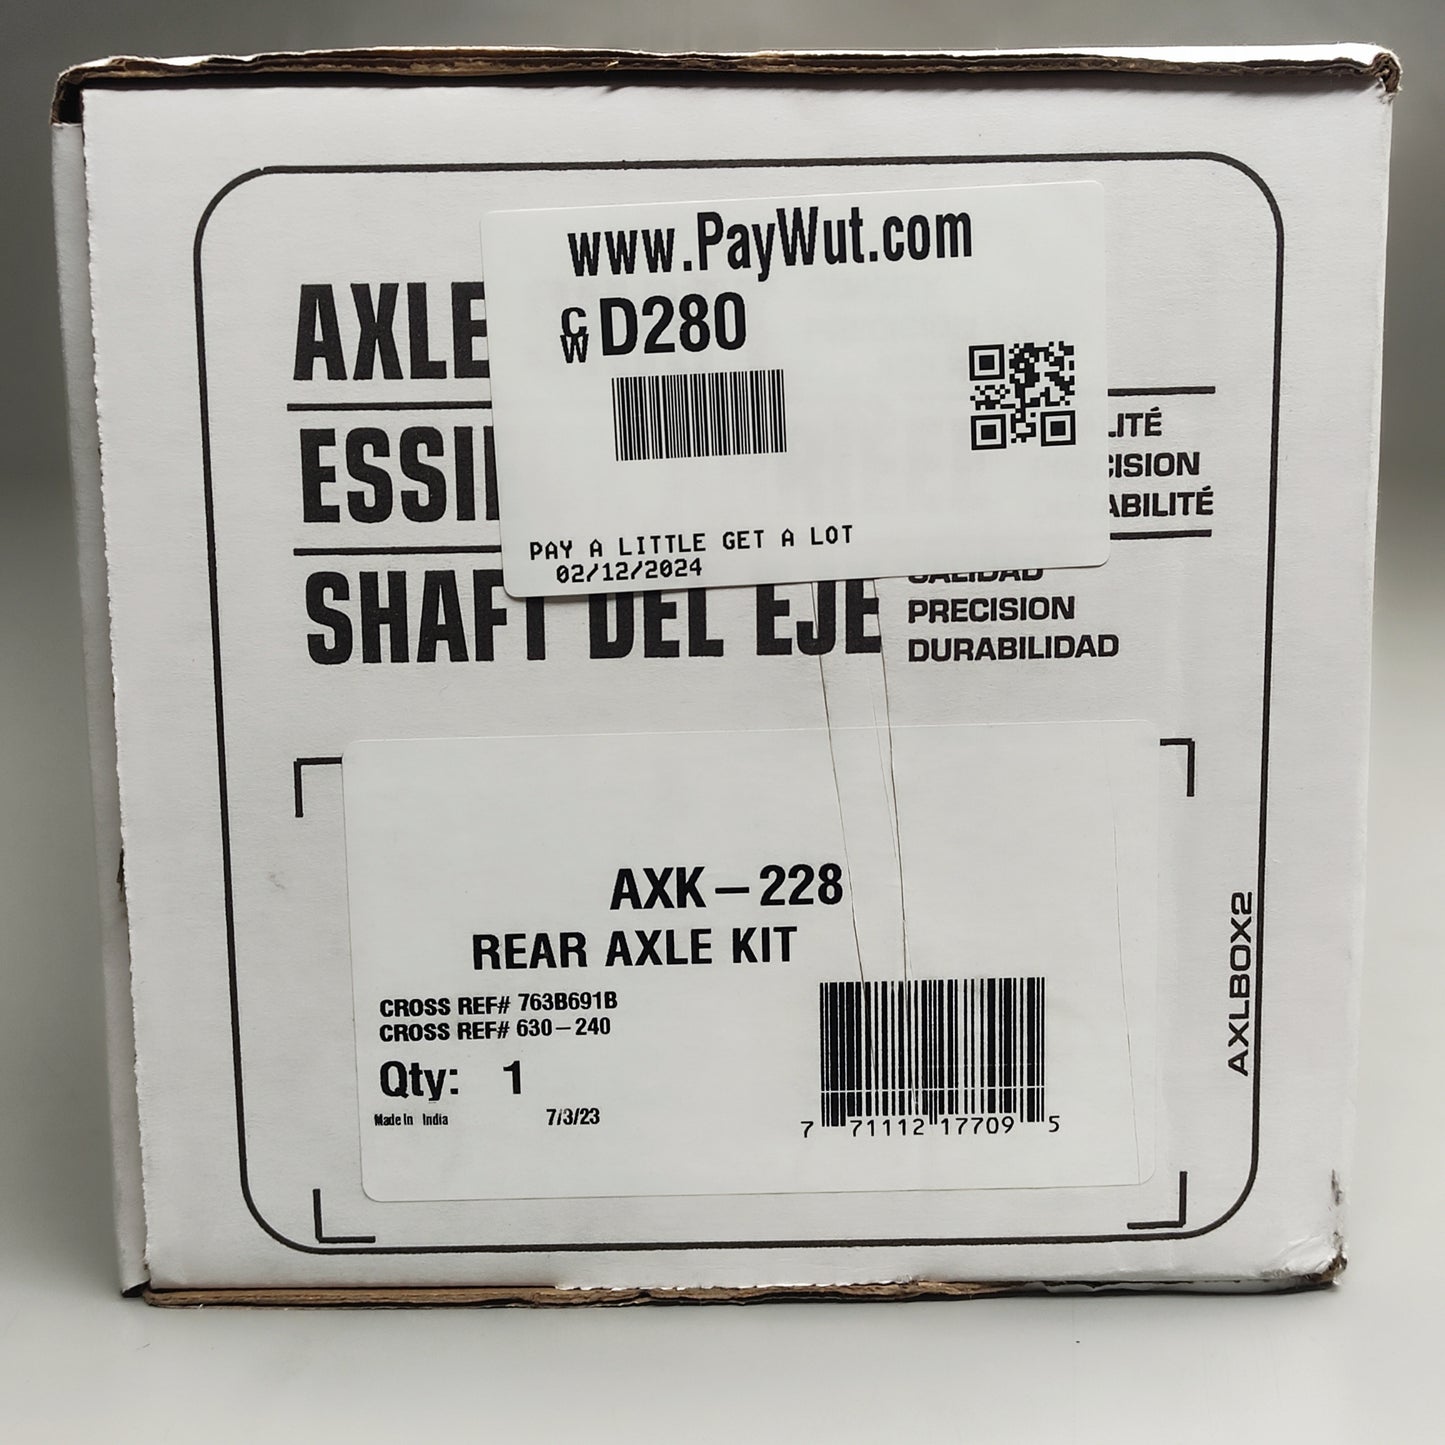 POWER TORQUE Axle Shaft Rear Axle Kit for FORD, LINCOIN AXK-228 (Ref 763B691B, 630-240)